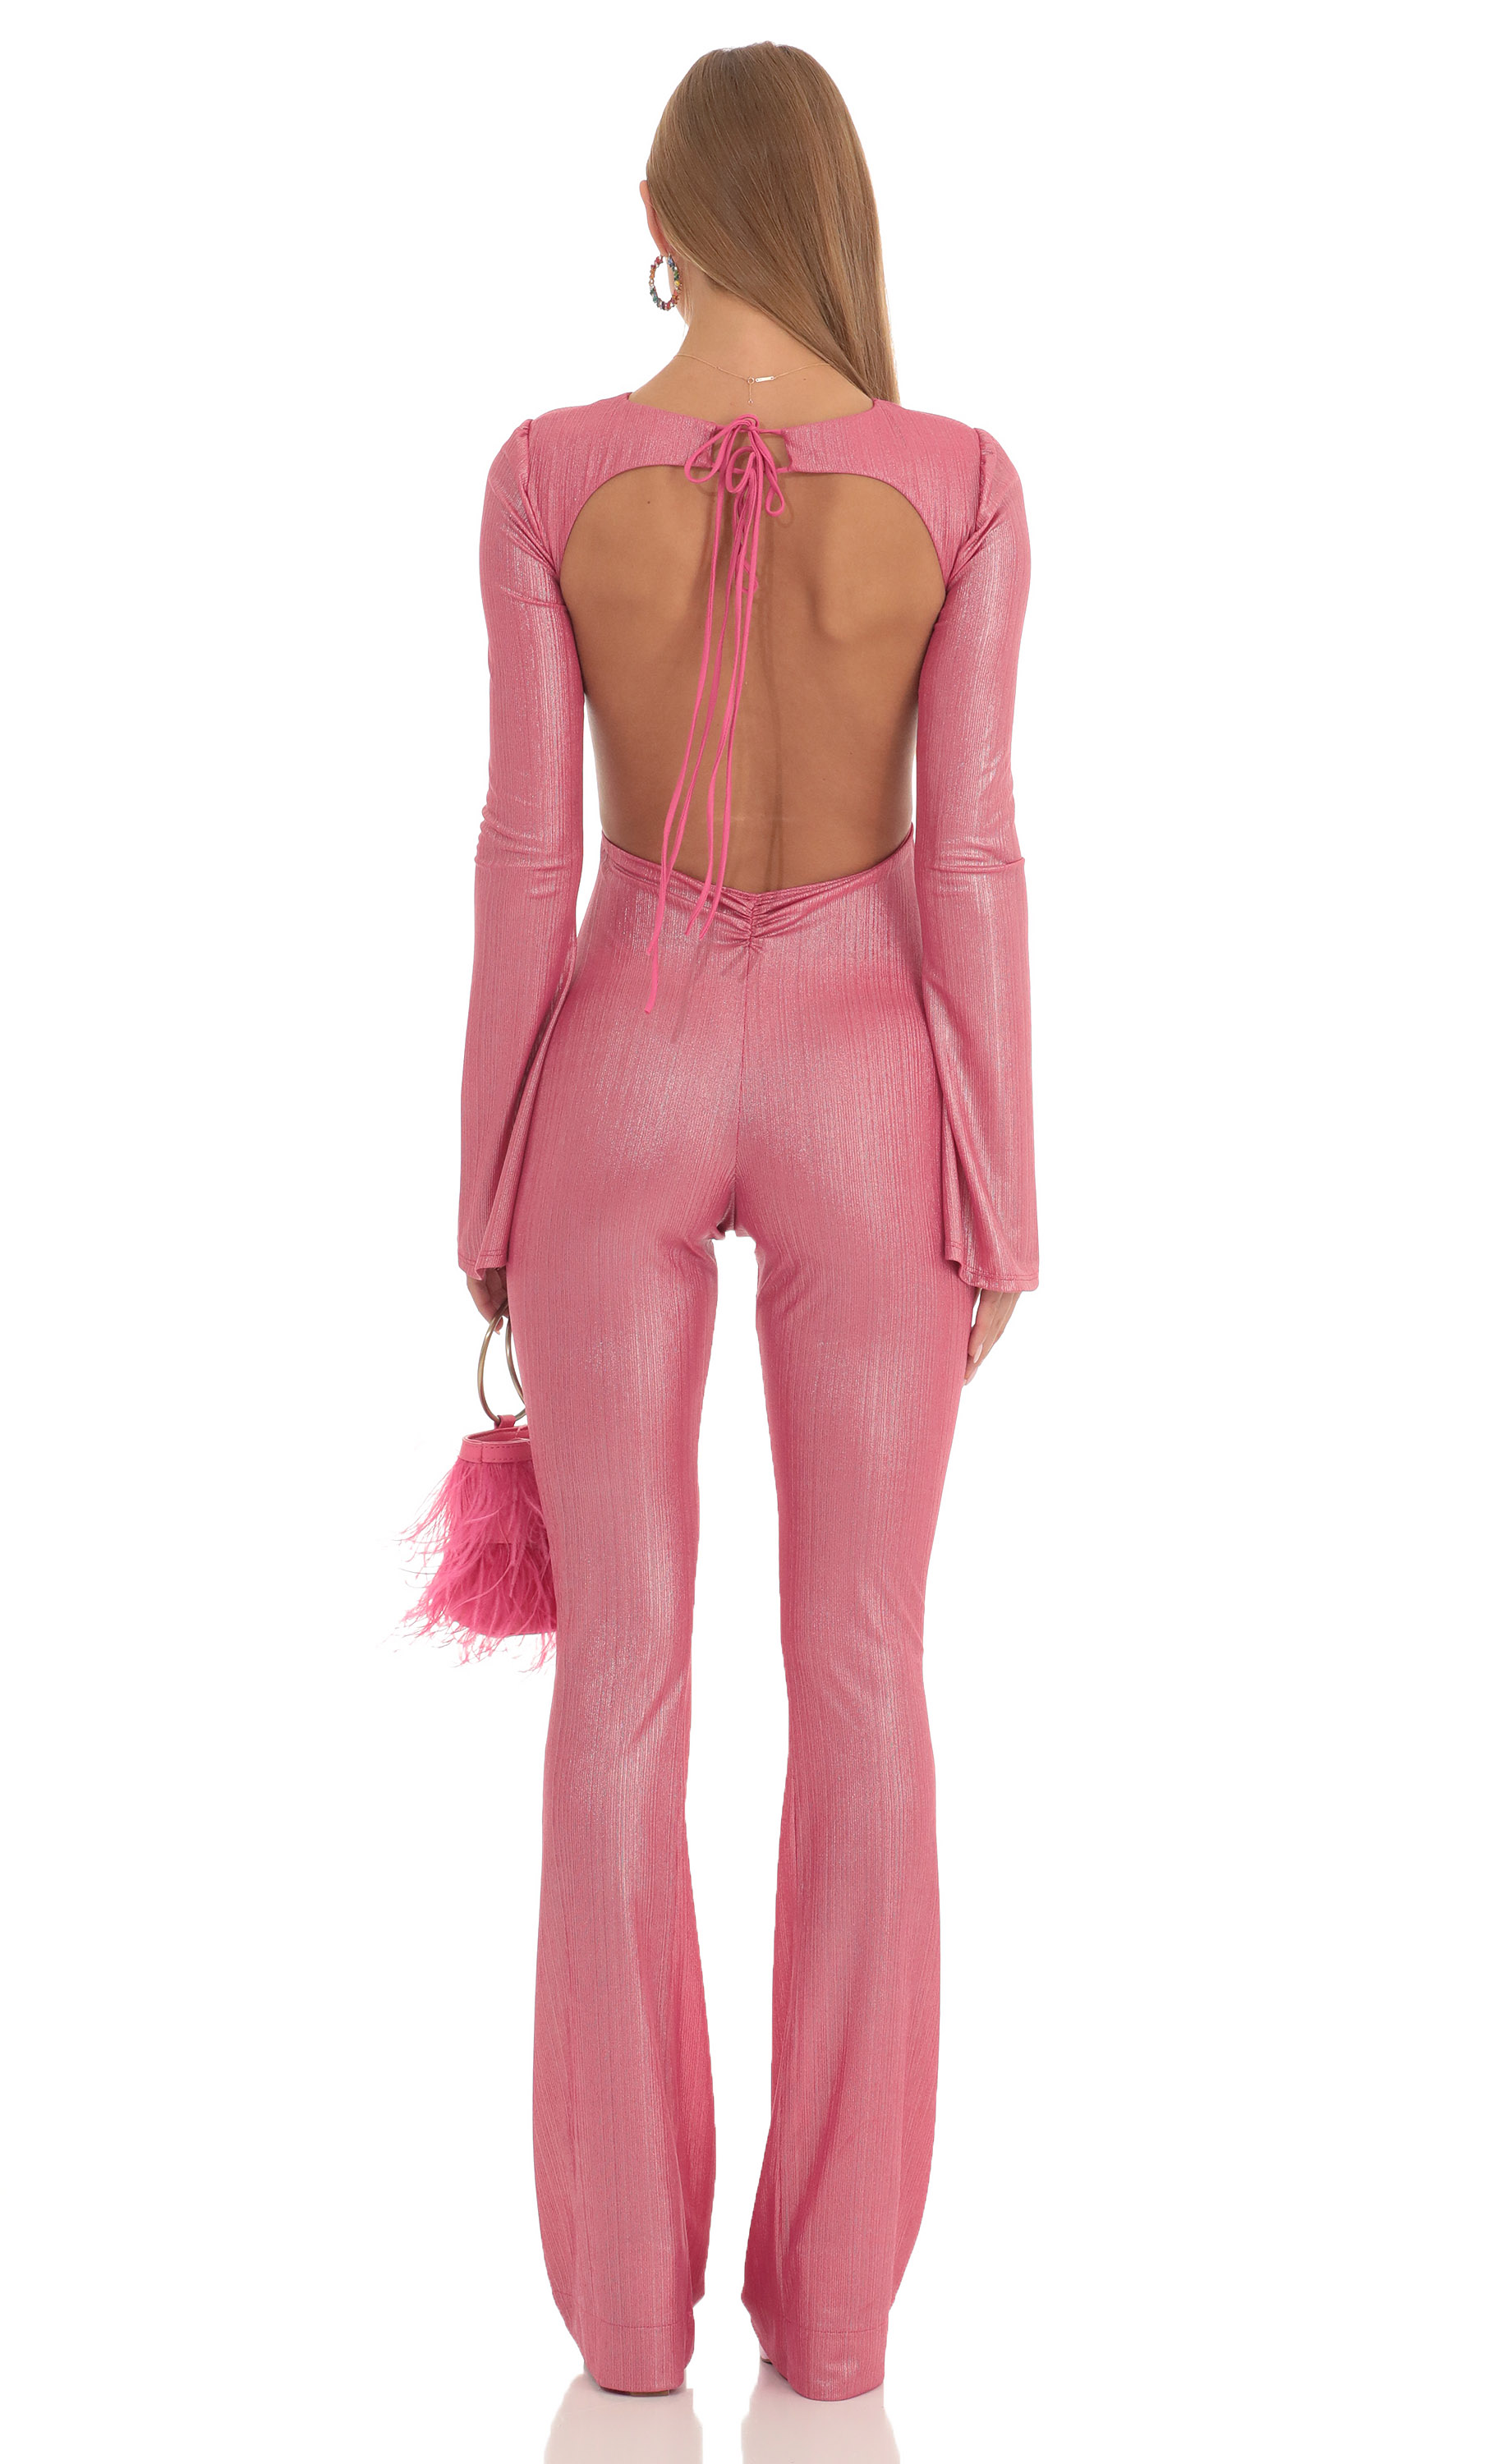 Kim Shimmer Open Back Jumpsuit in Hot Pink